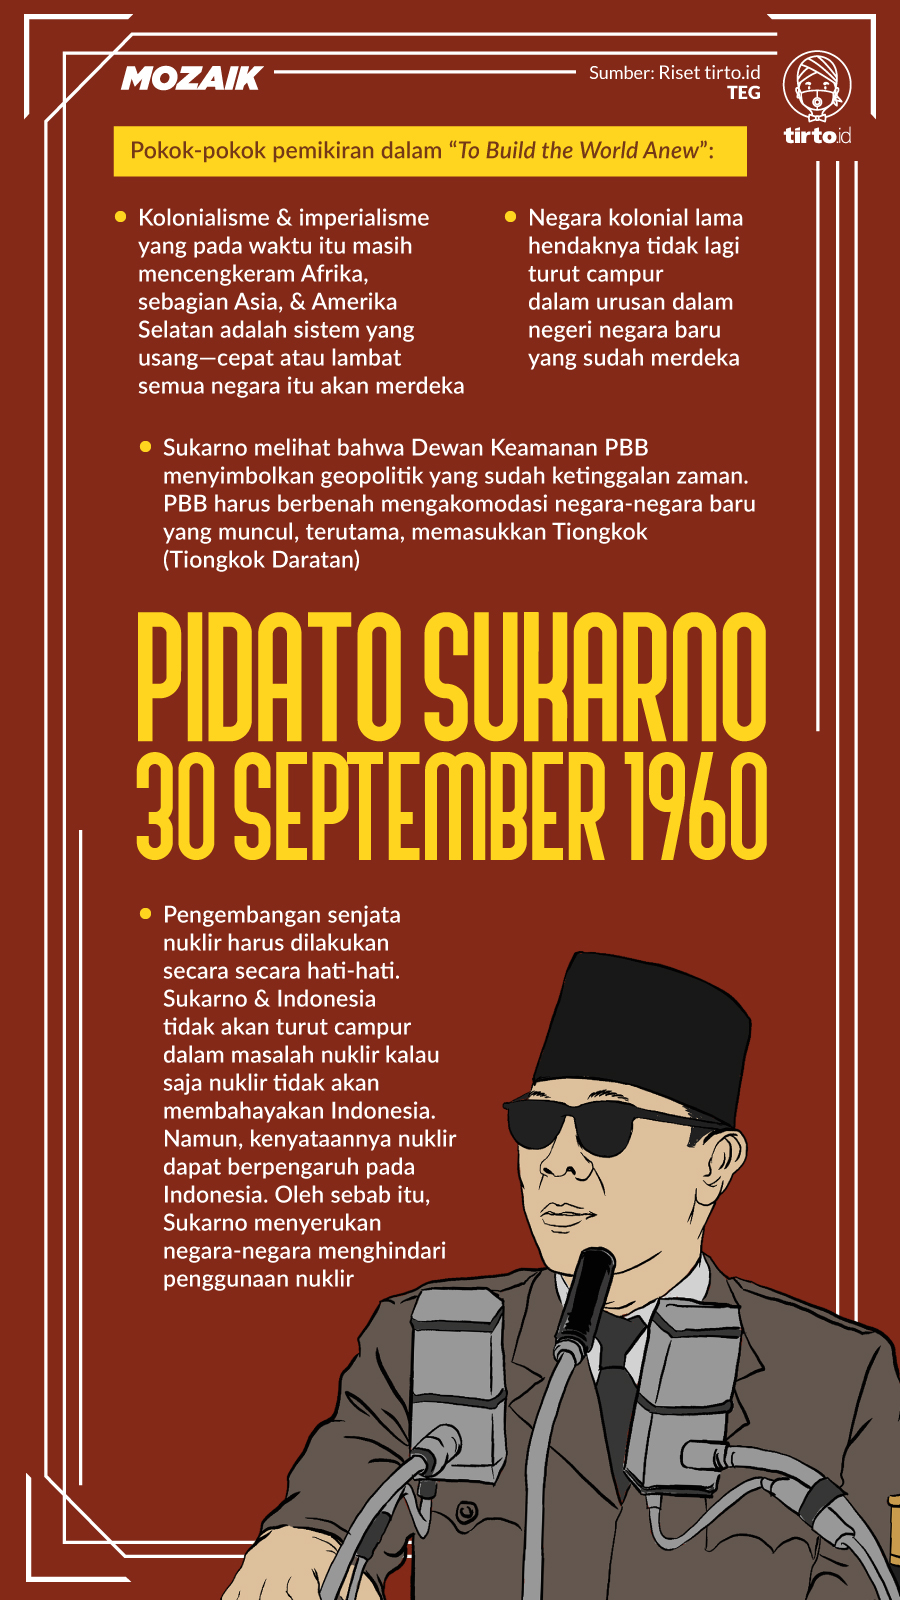 Infografik Mozaik Pidato Sukarno 30 September 1960